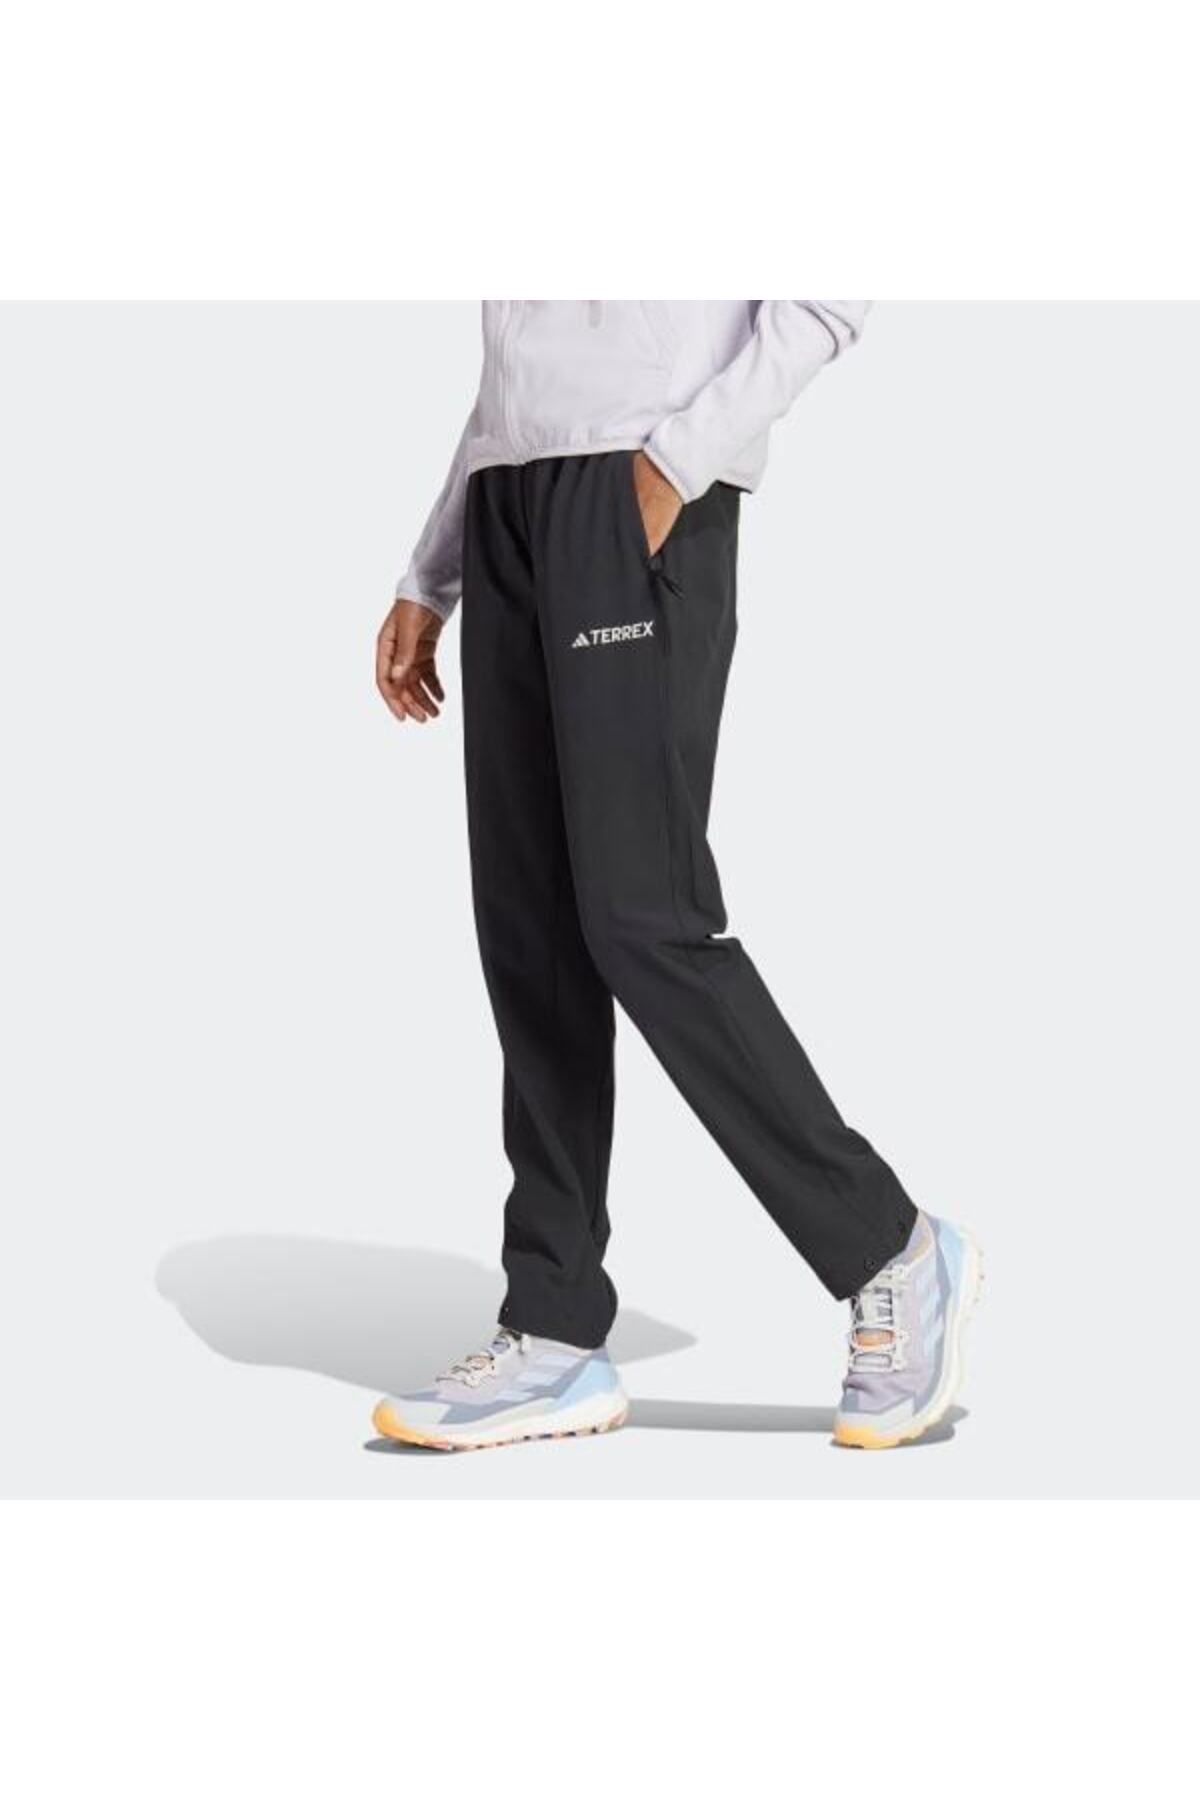 Mens Adidas Slim Fit Tracksuit Jogging Bottoms Joggers Track Pants - Black  | eBay